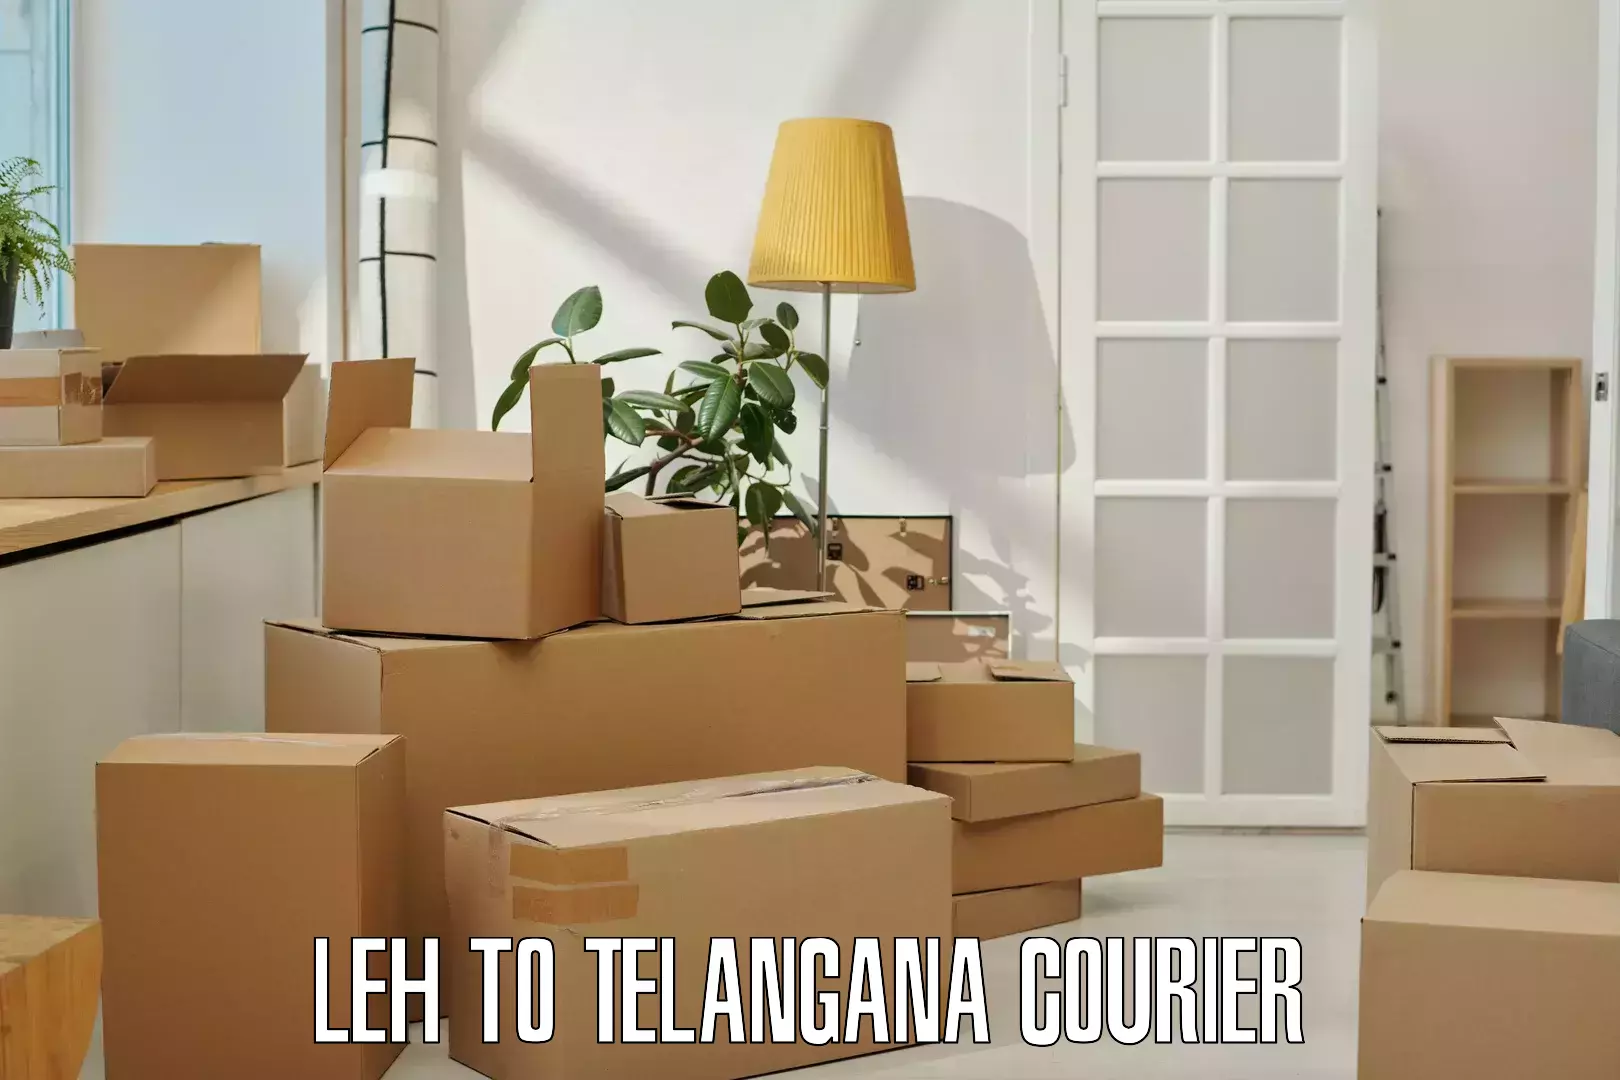 Courier service comparison Leh to Madhira